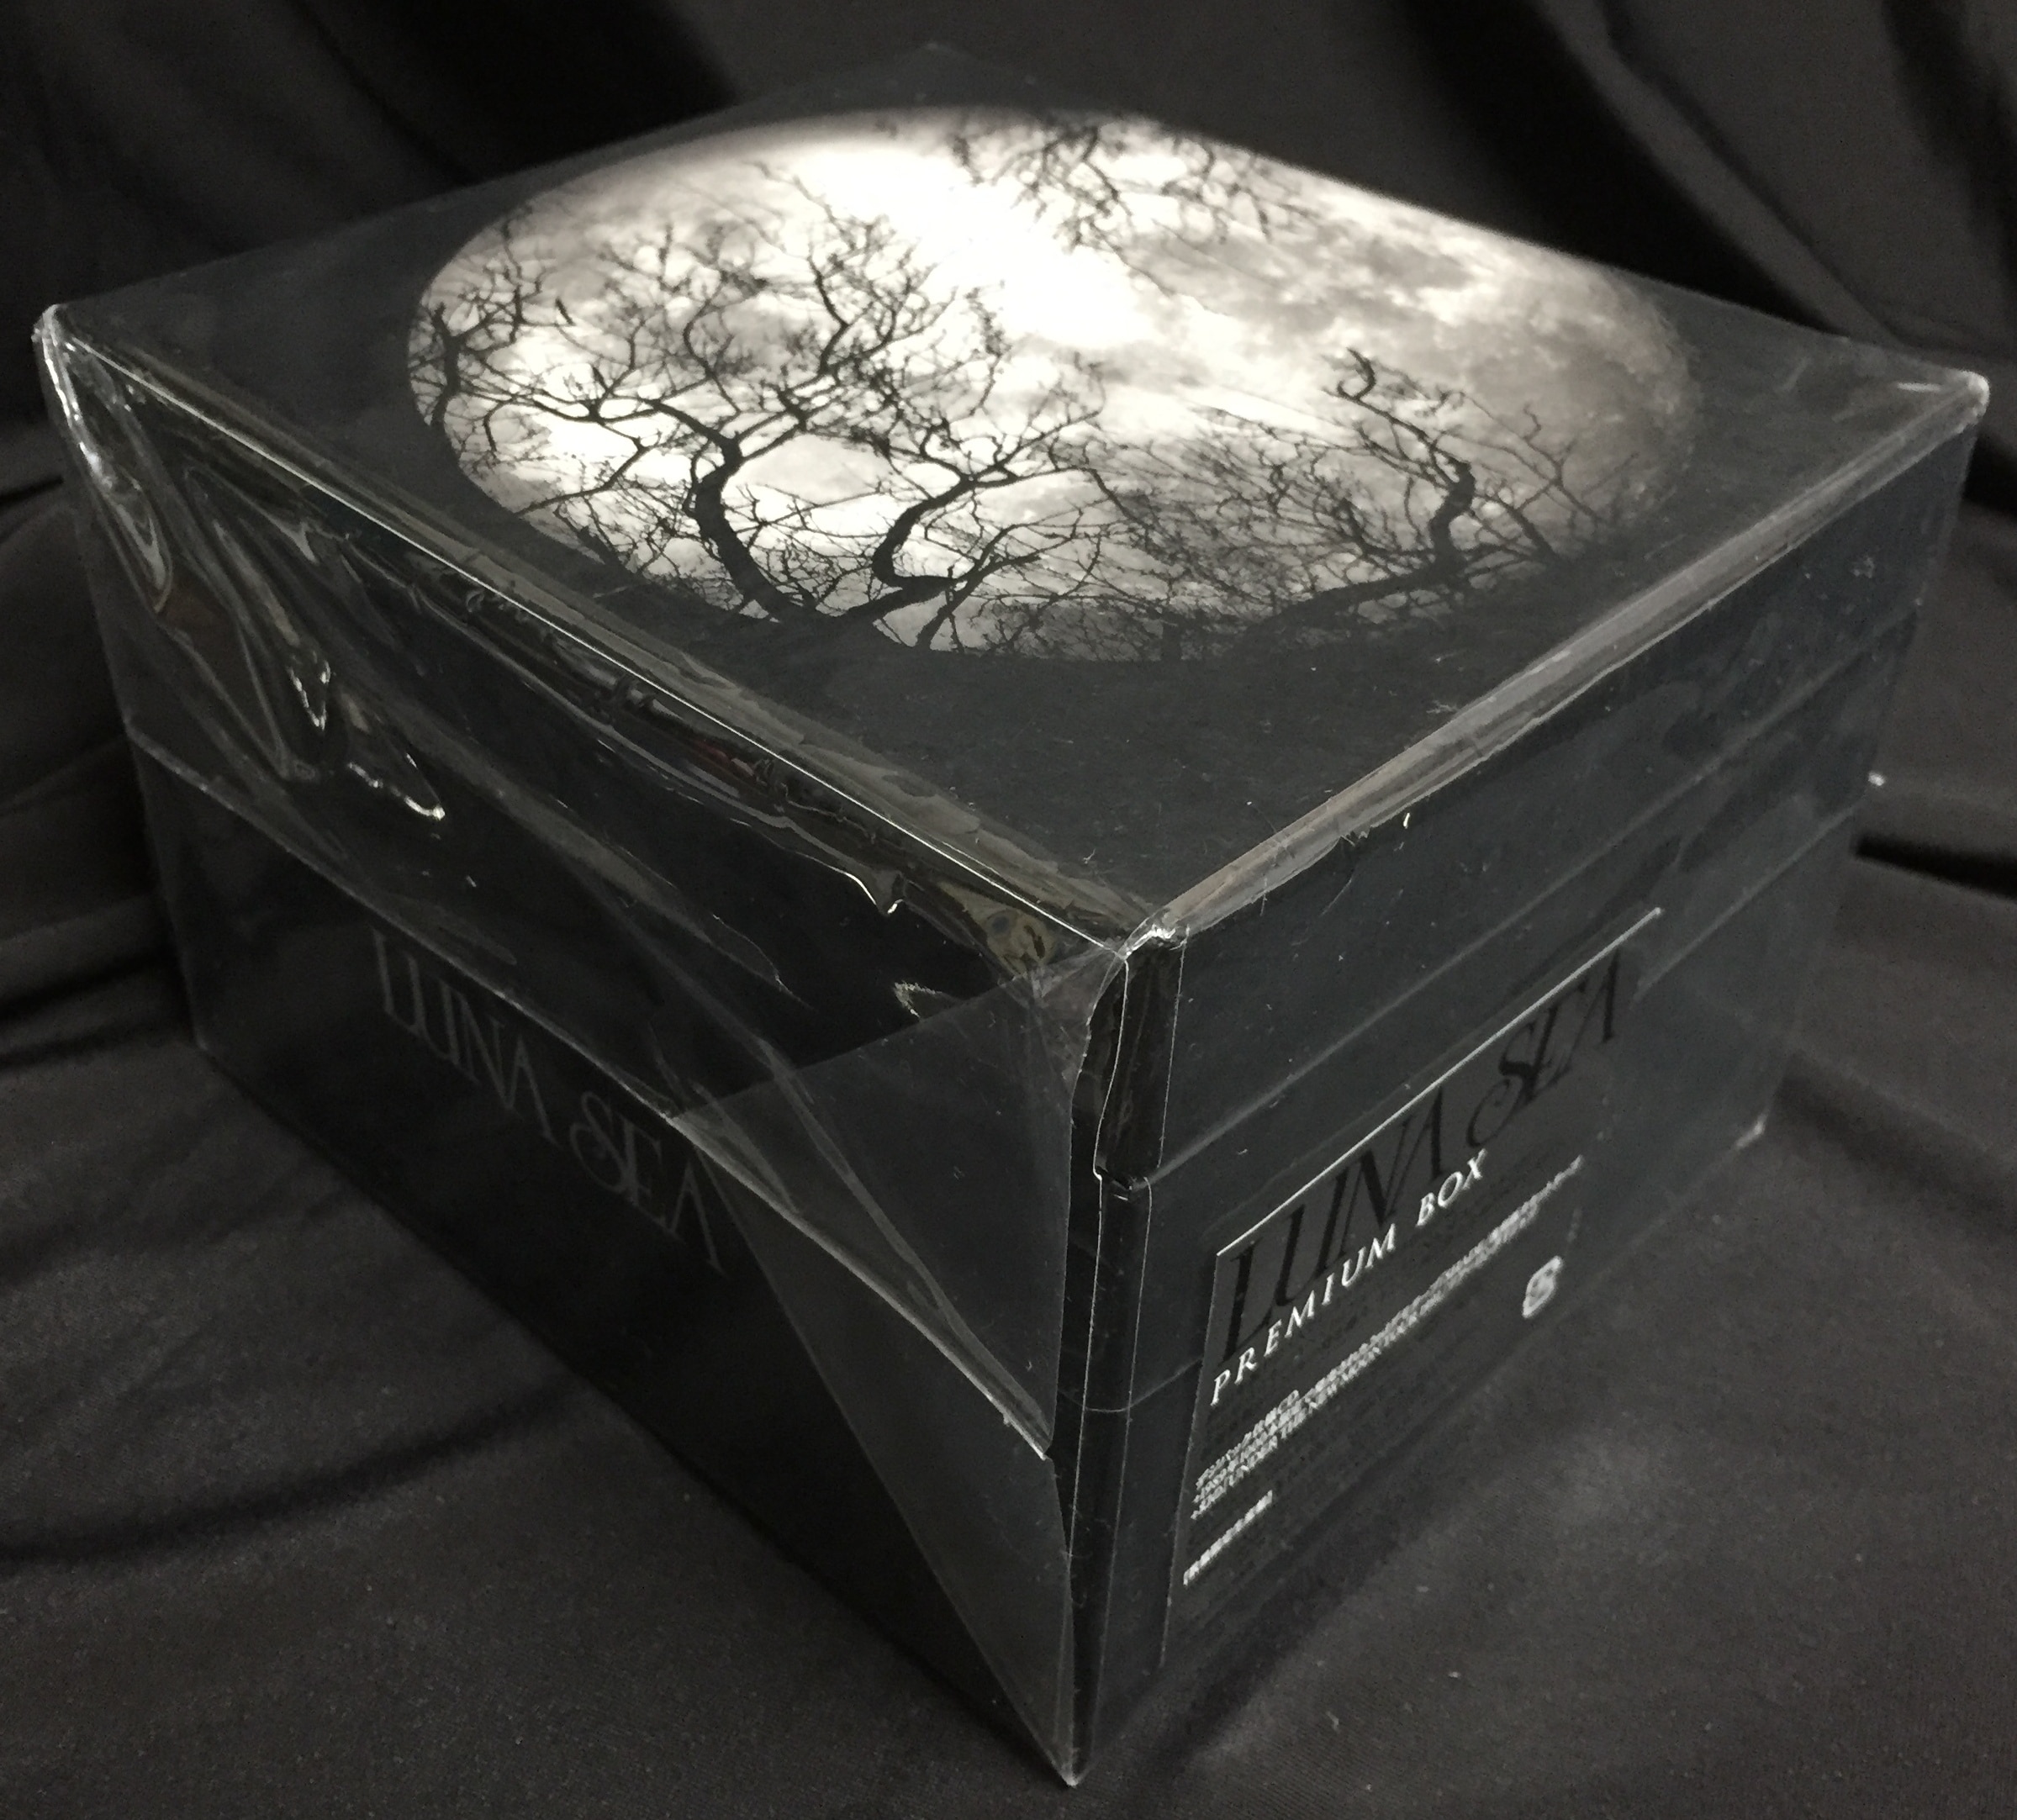 LUNA SEA 数量限定生産盤 PREMIUM BOX(CD+カセットテープ+ロングT